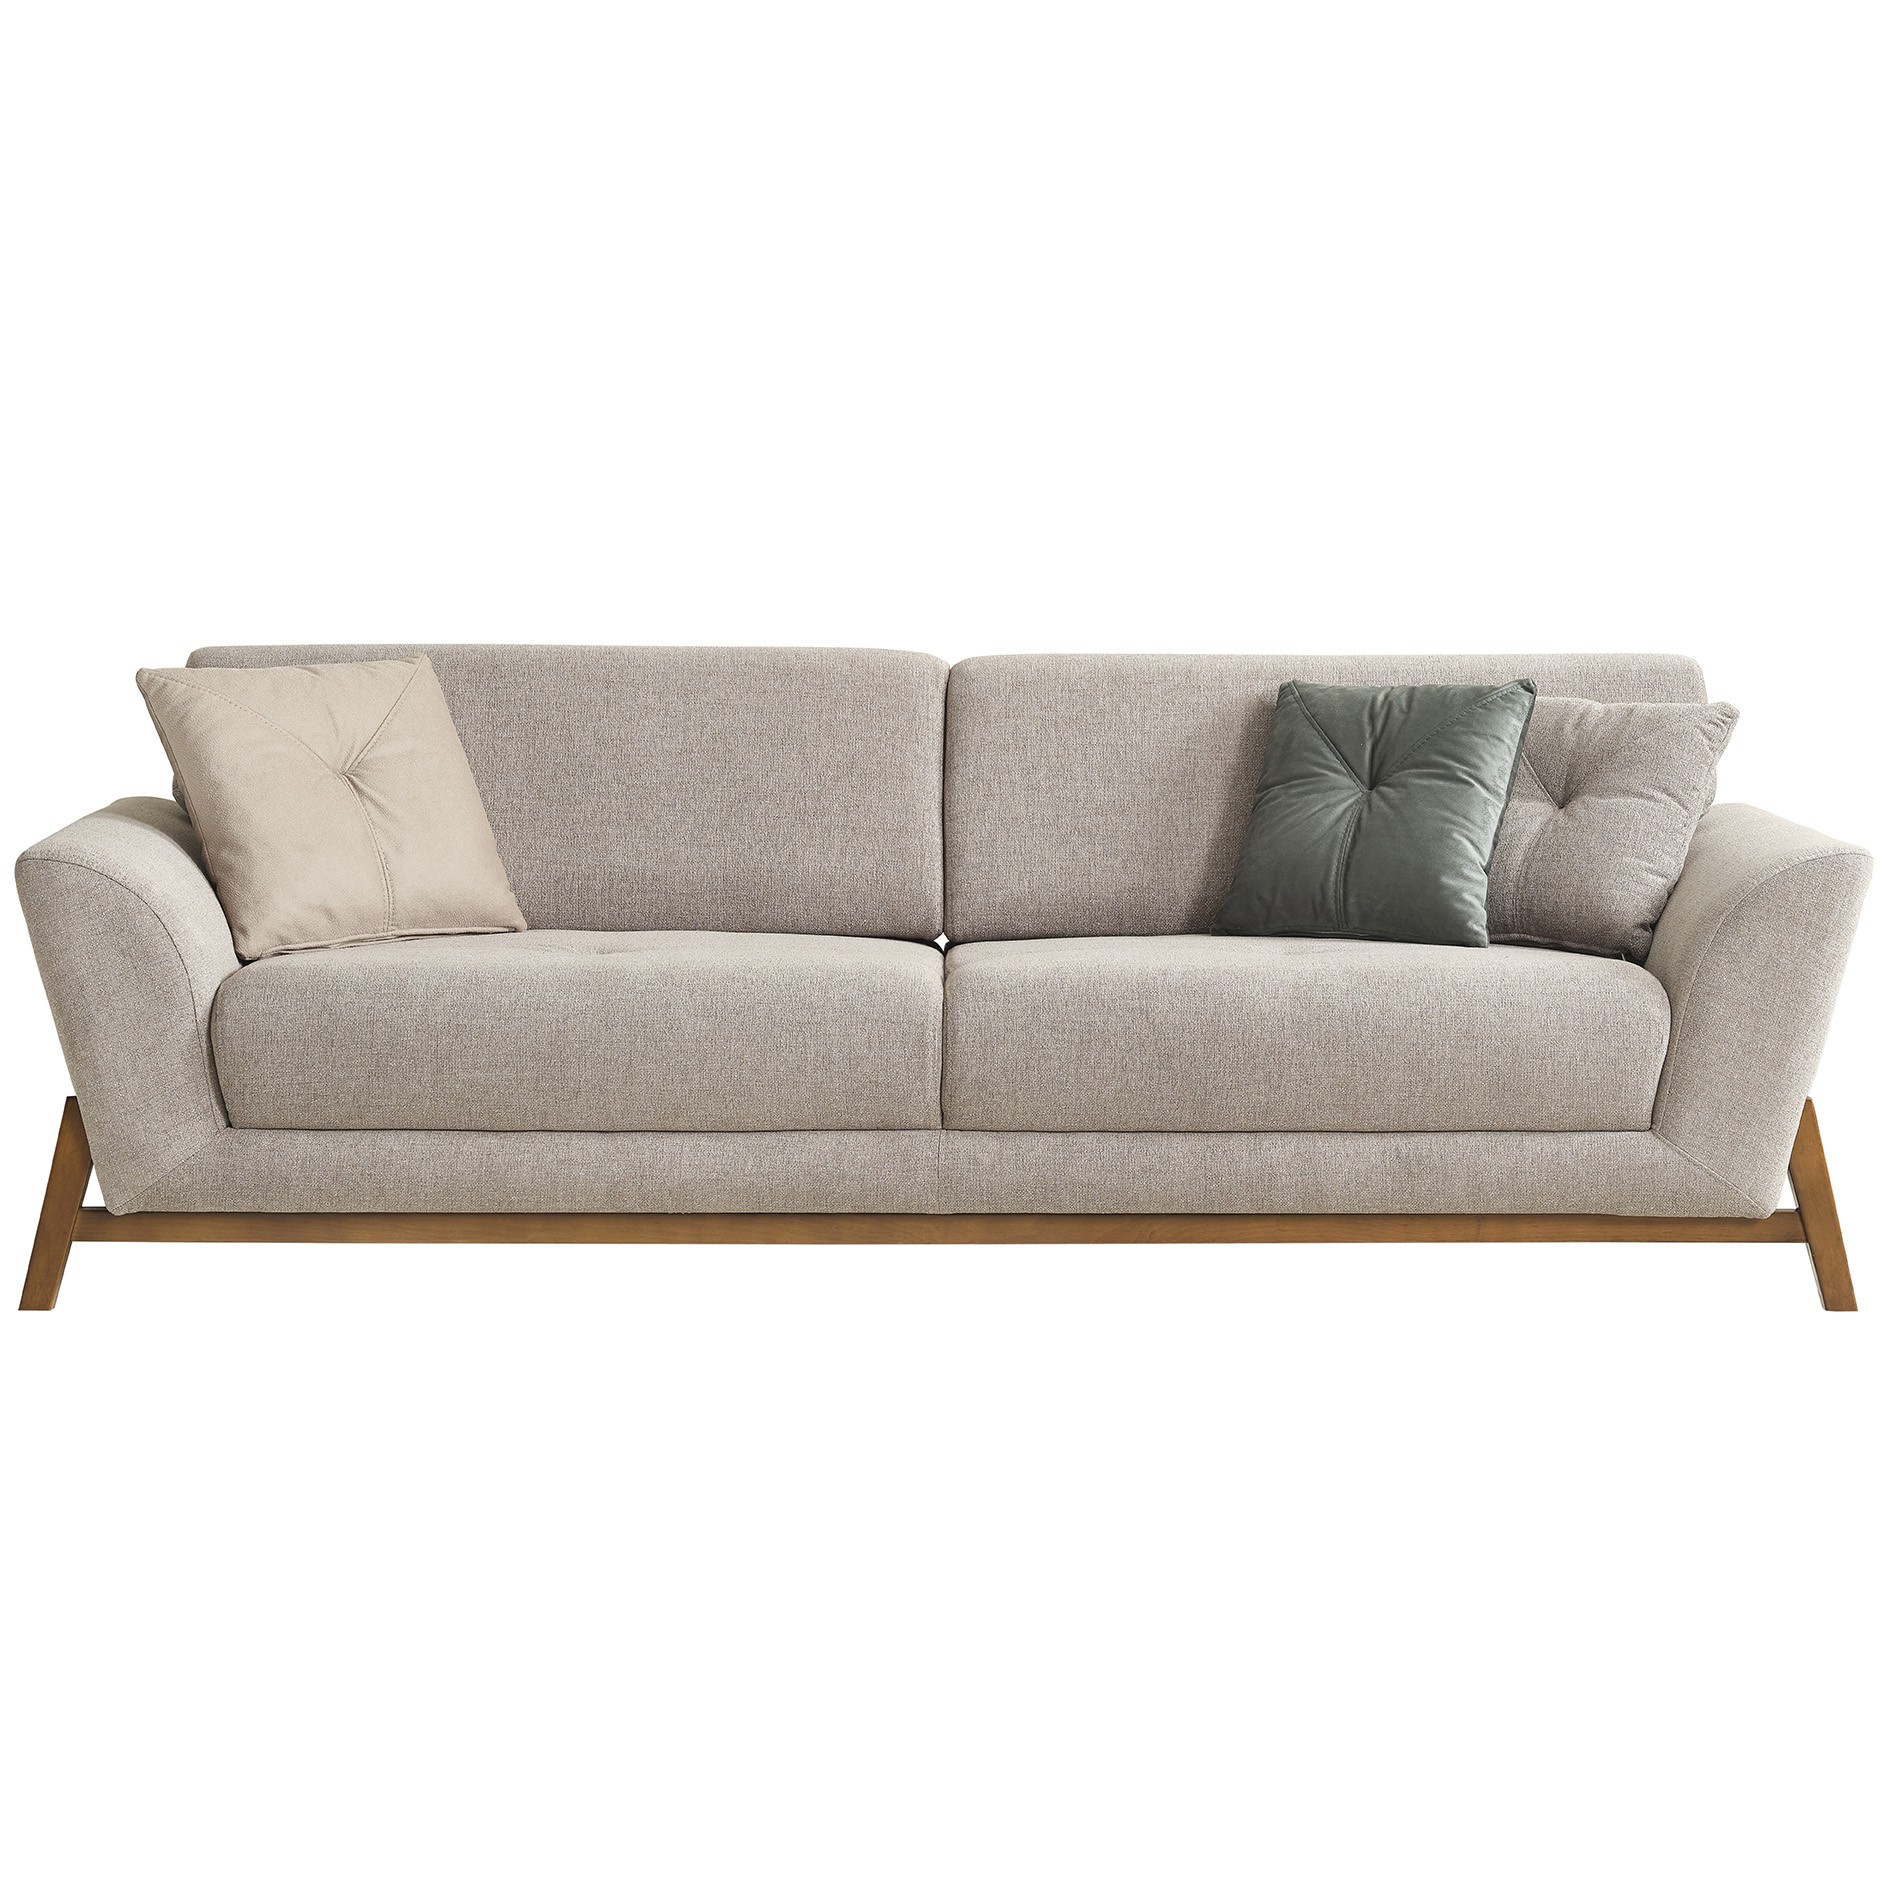 Juliet Vol1 3 Seater Sofa